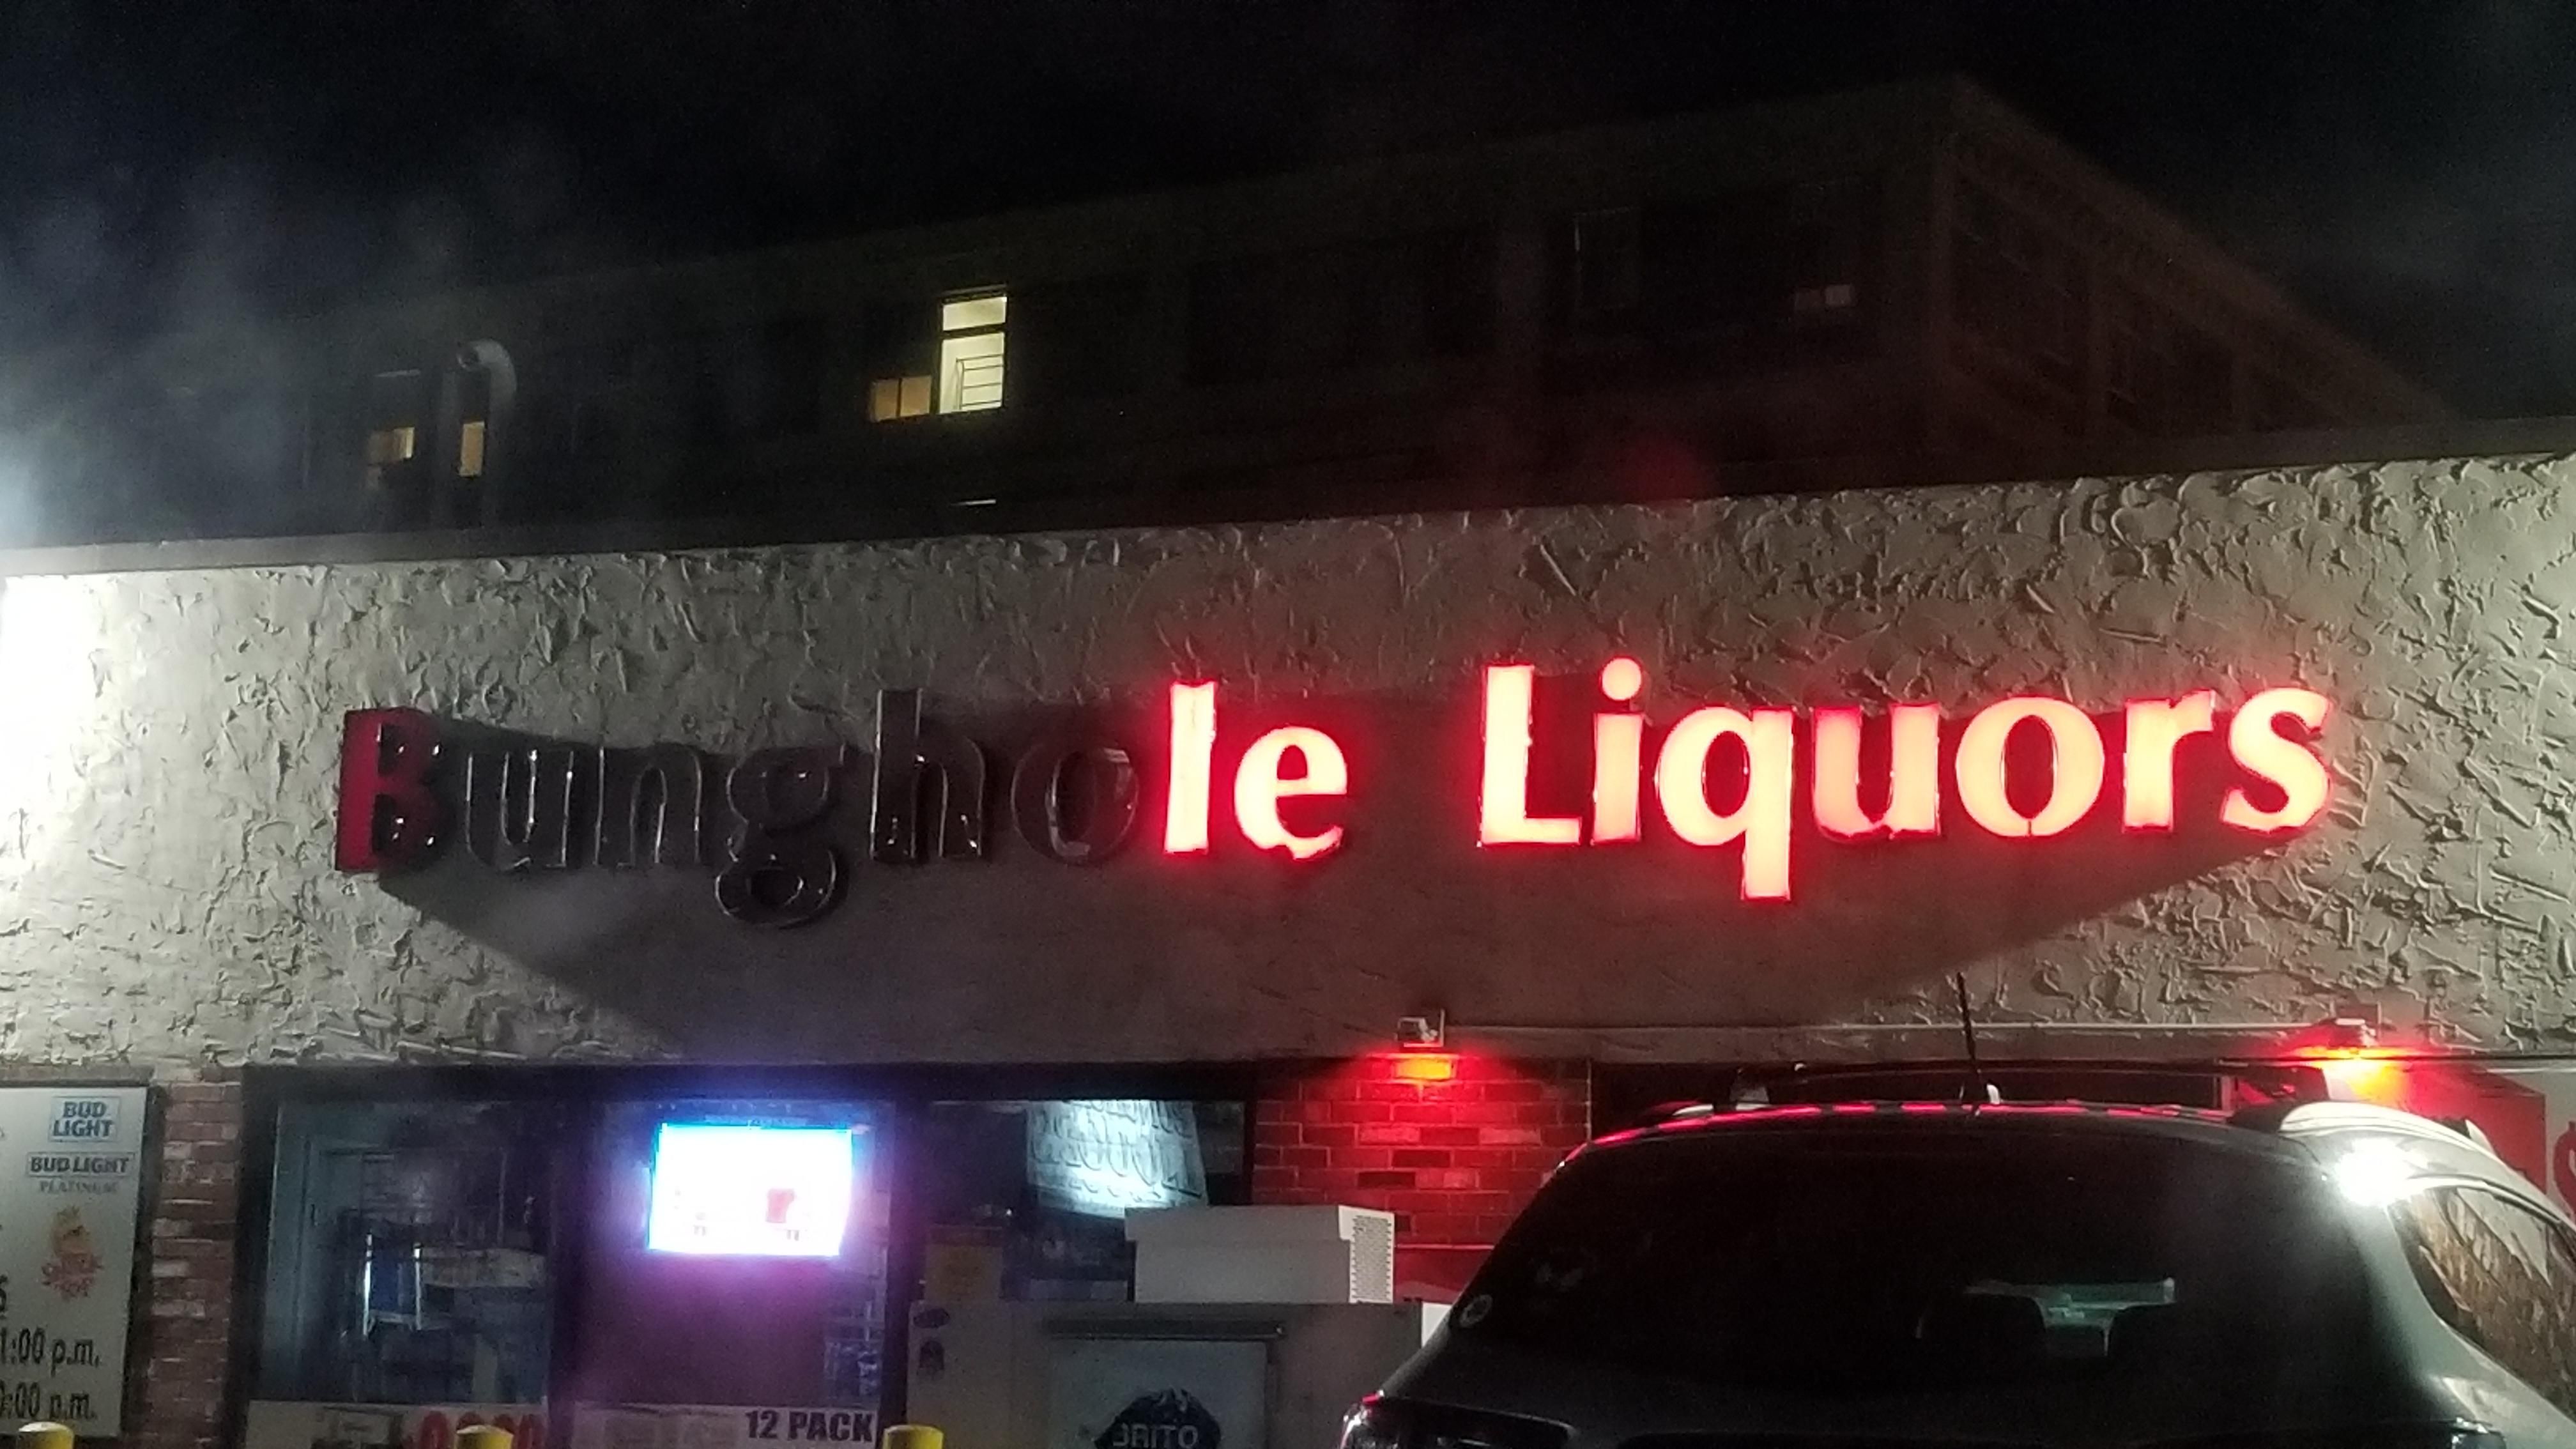 Local liquor store classing it up a bit.